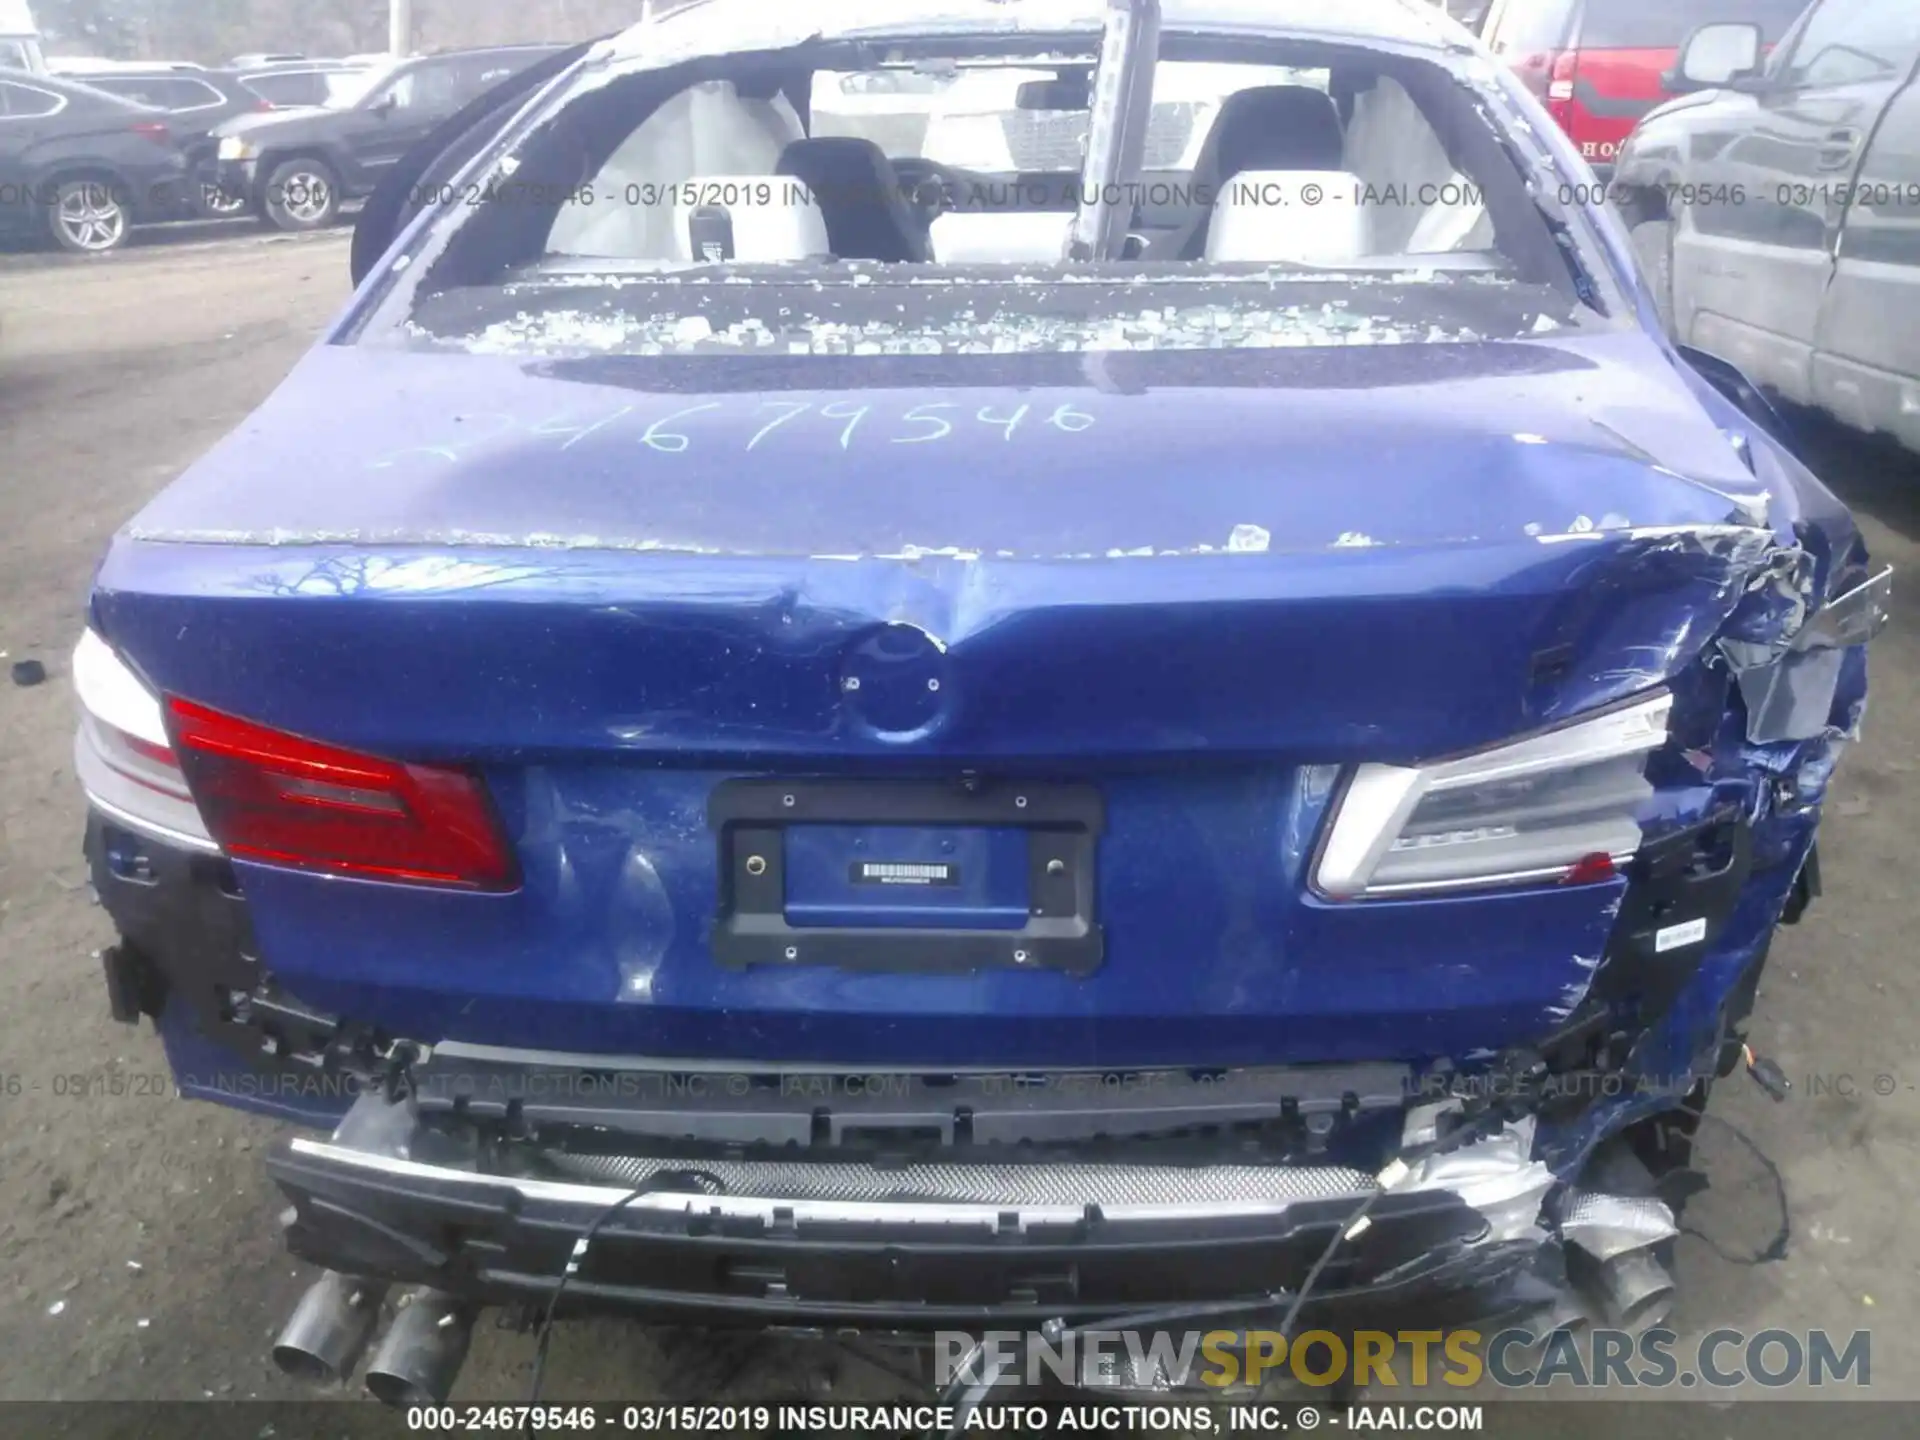 6 Photograph of a damaged car WBSJF0C53KB285741 BMW M5 2019